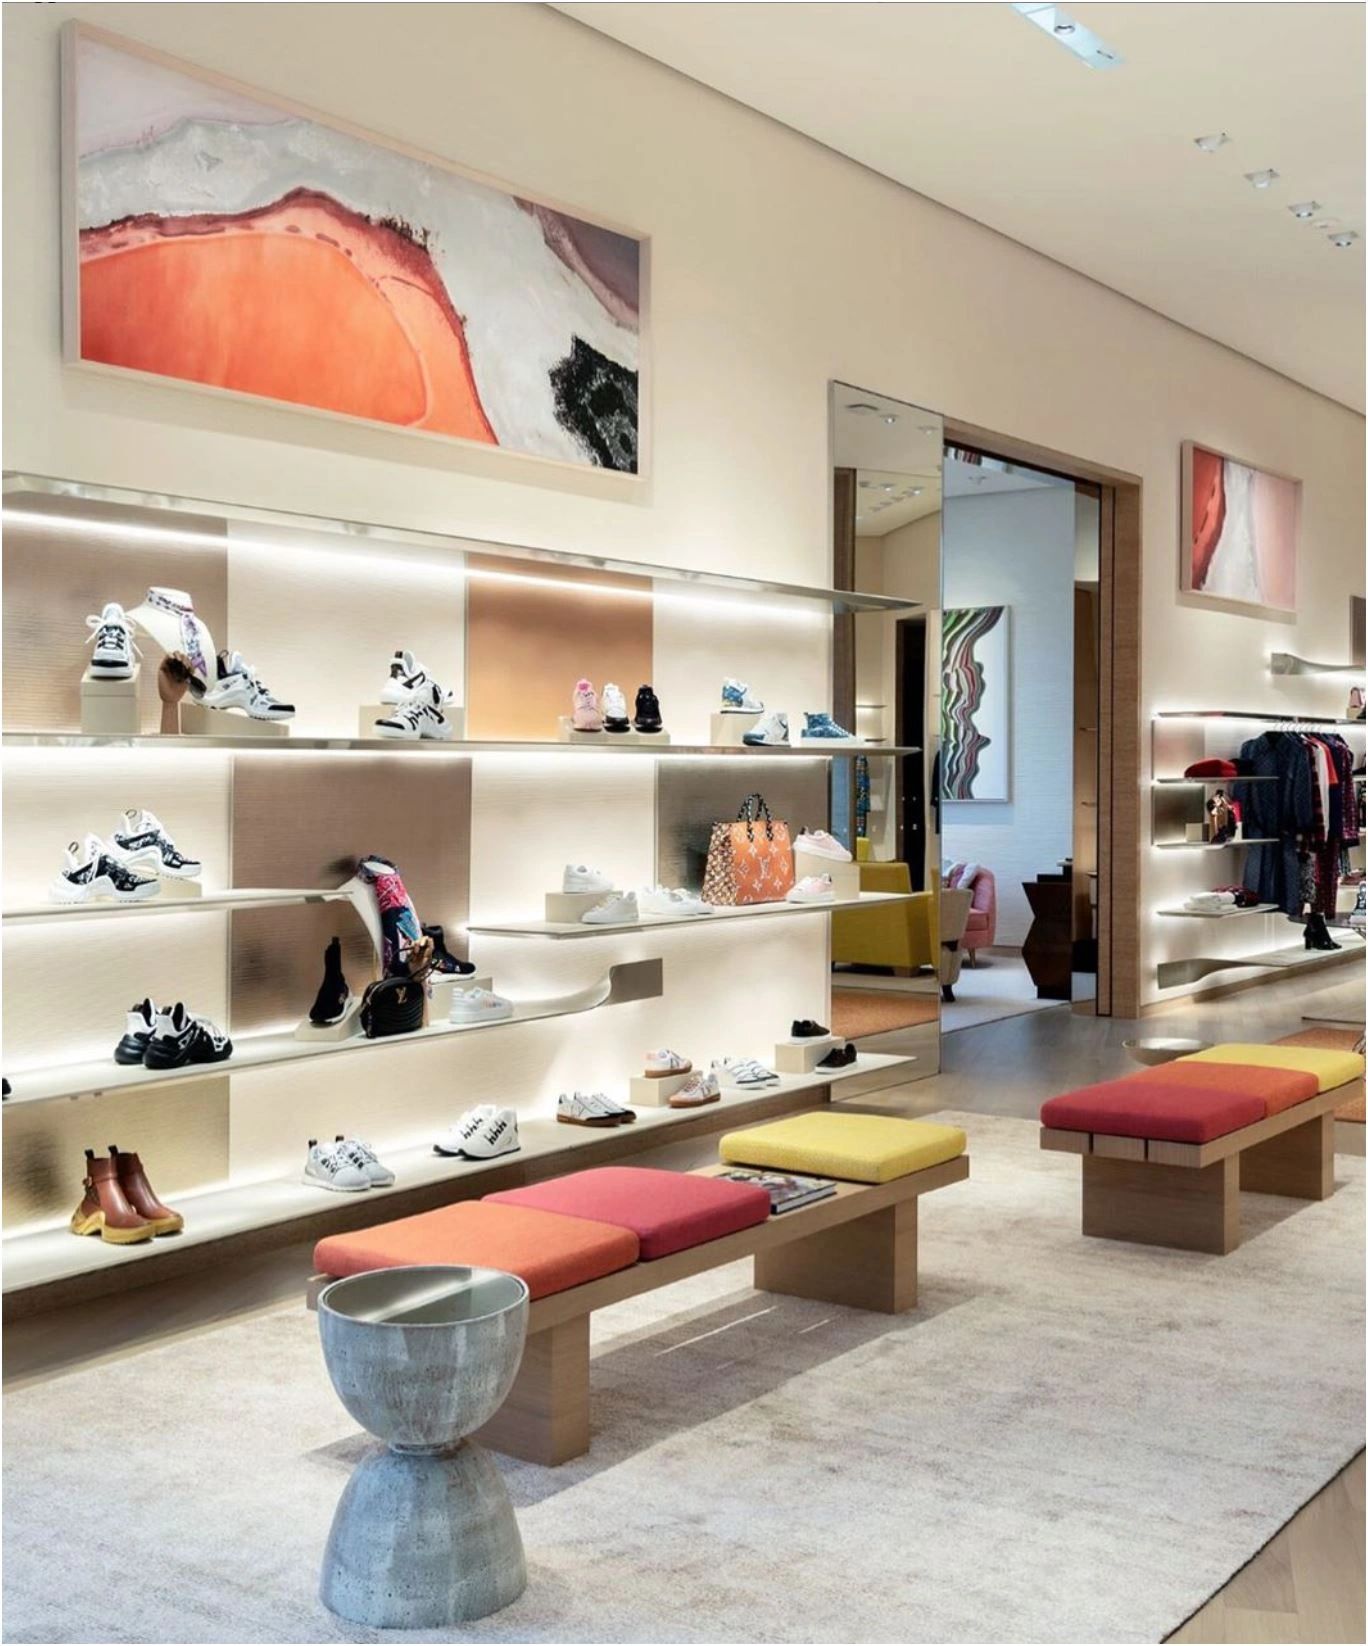 Louis Vuitton and Tiffany & Co shopfronts, King Street, Perth, Western  Australia Stock Photo - Alamy